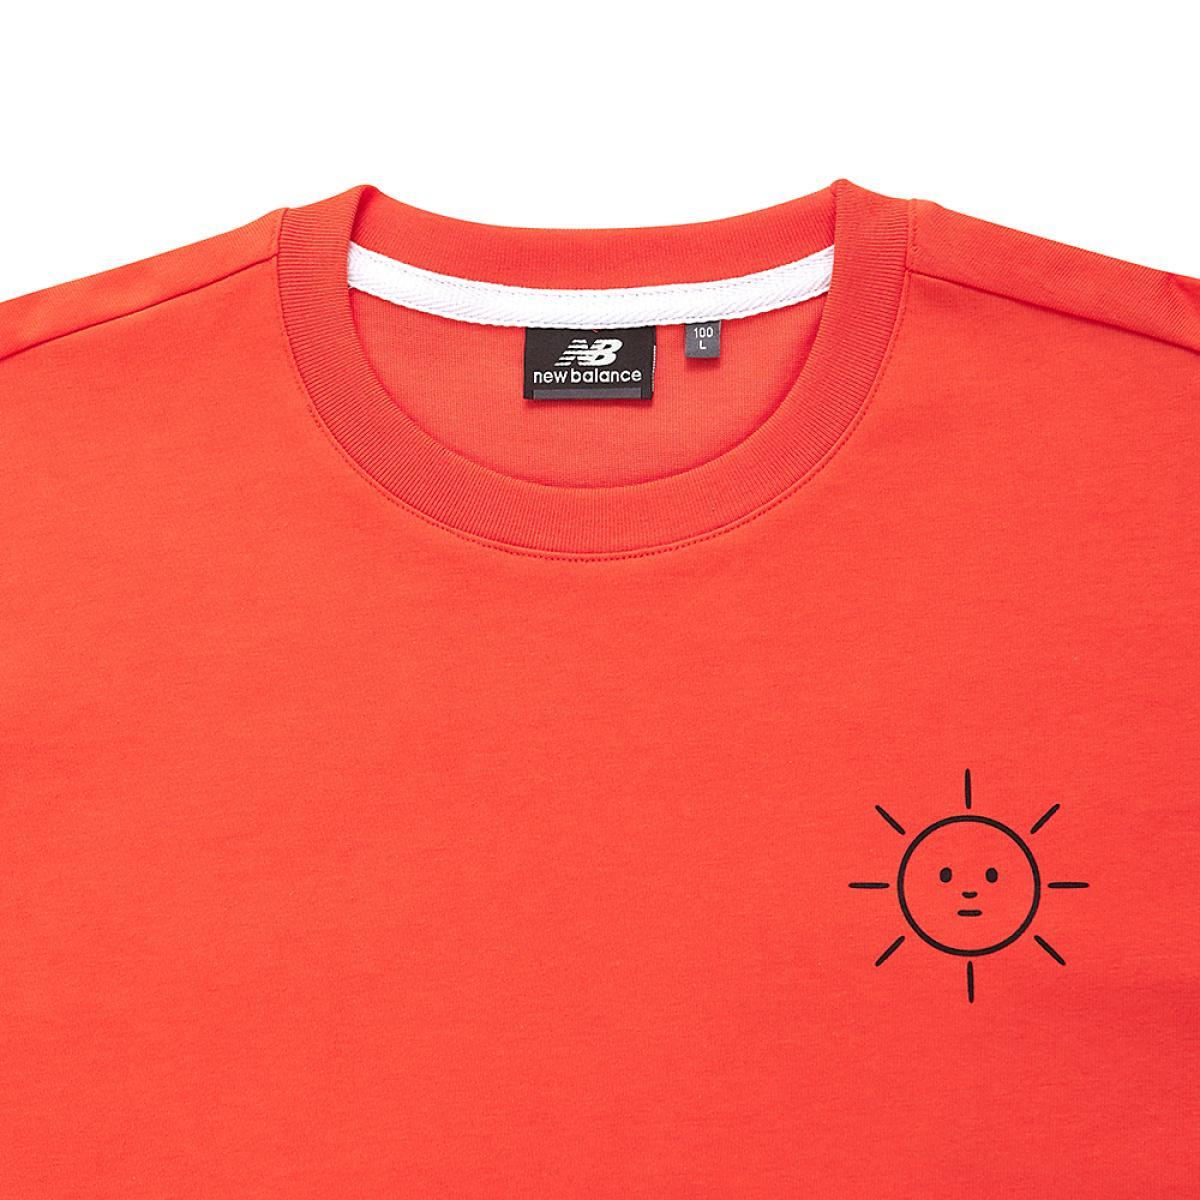 orange new balance t shirt